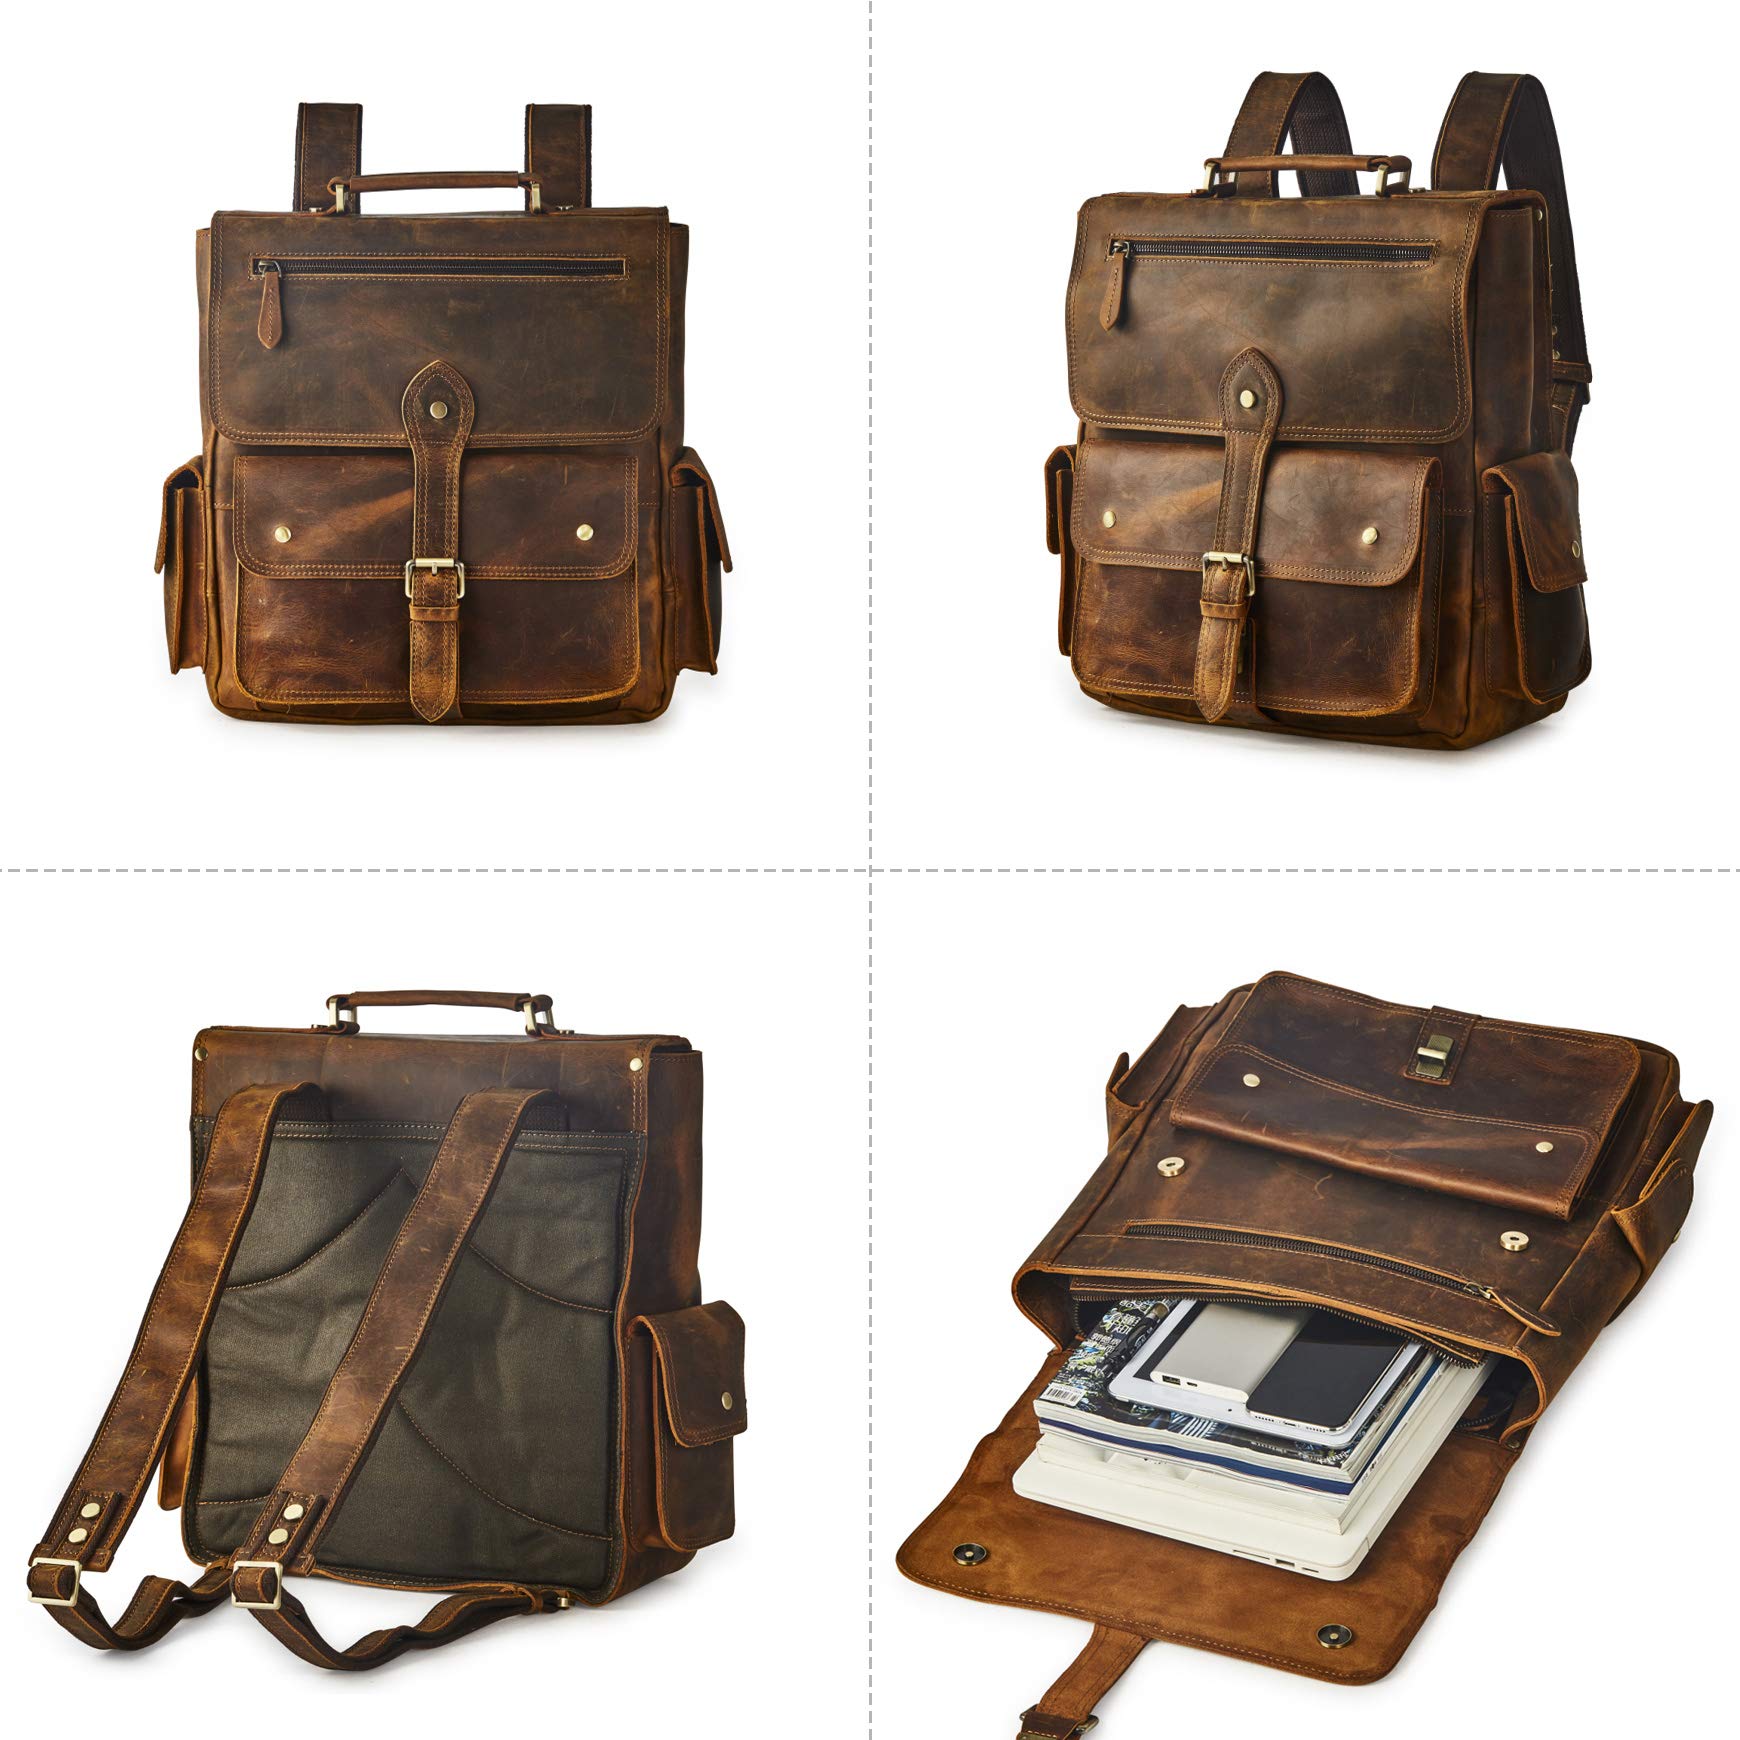 BRASS TACKS Leathercraft Backpack for Men Women Vintage Full Leather Rucksack Laptop Casual Travel Daypack